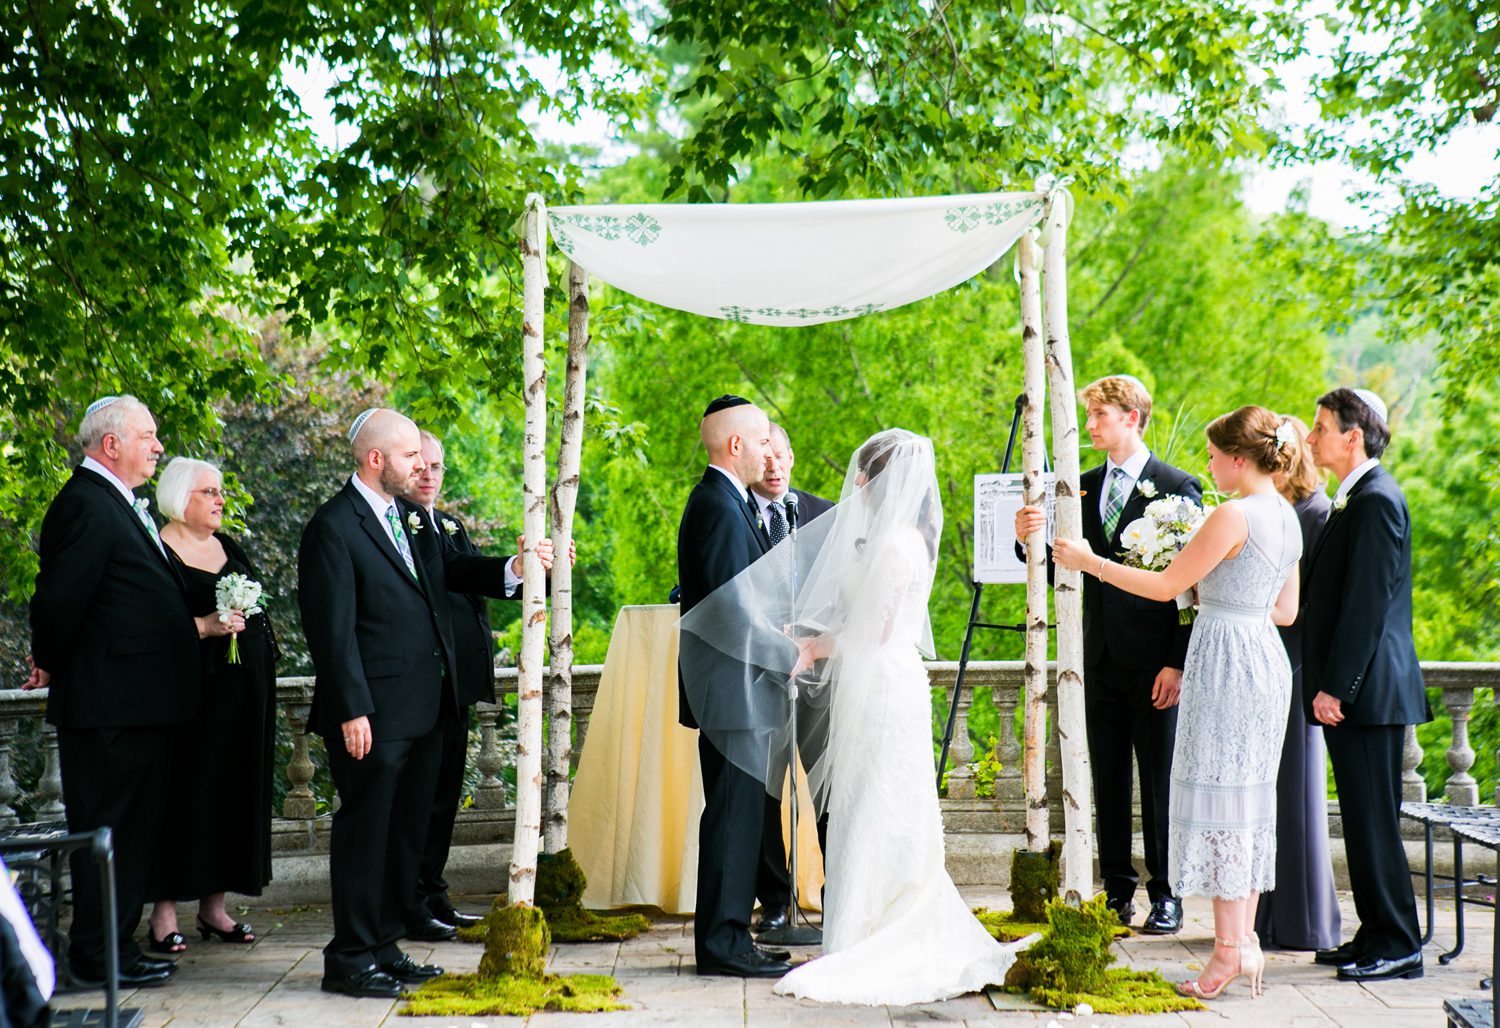 Outdoor Jewish Wedding Ceremony